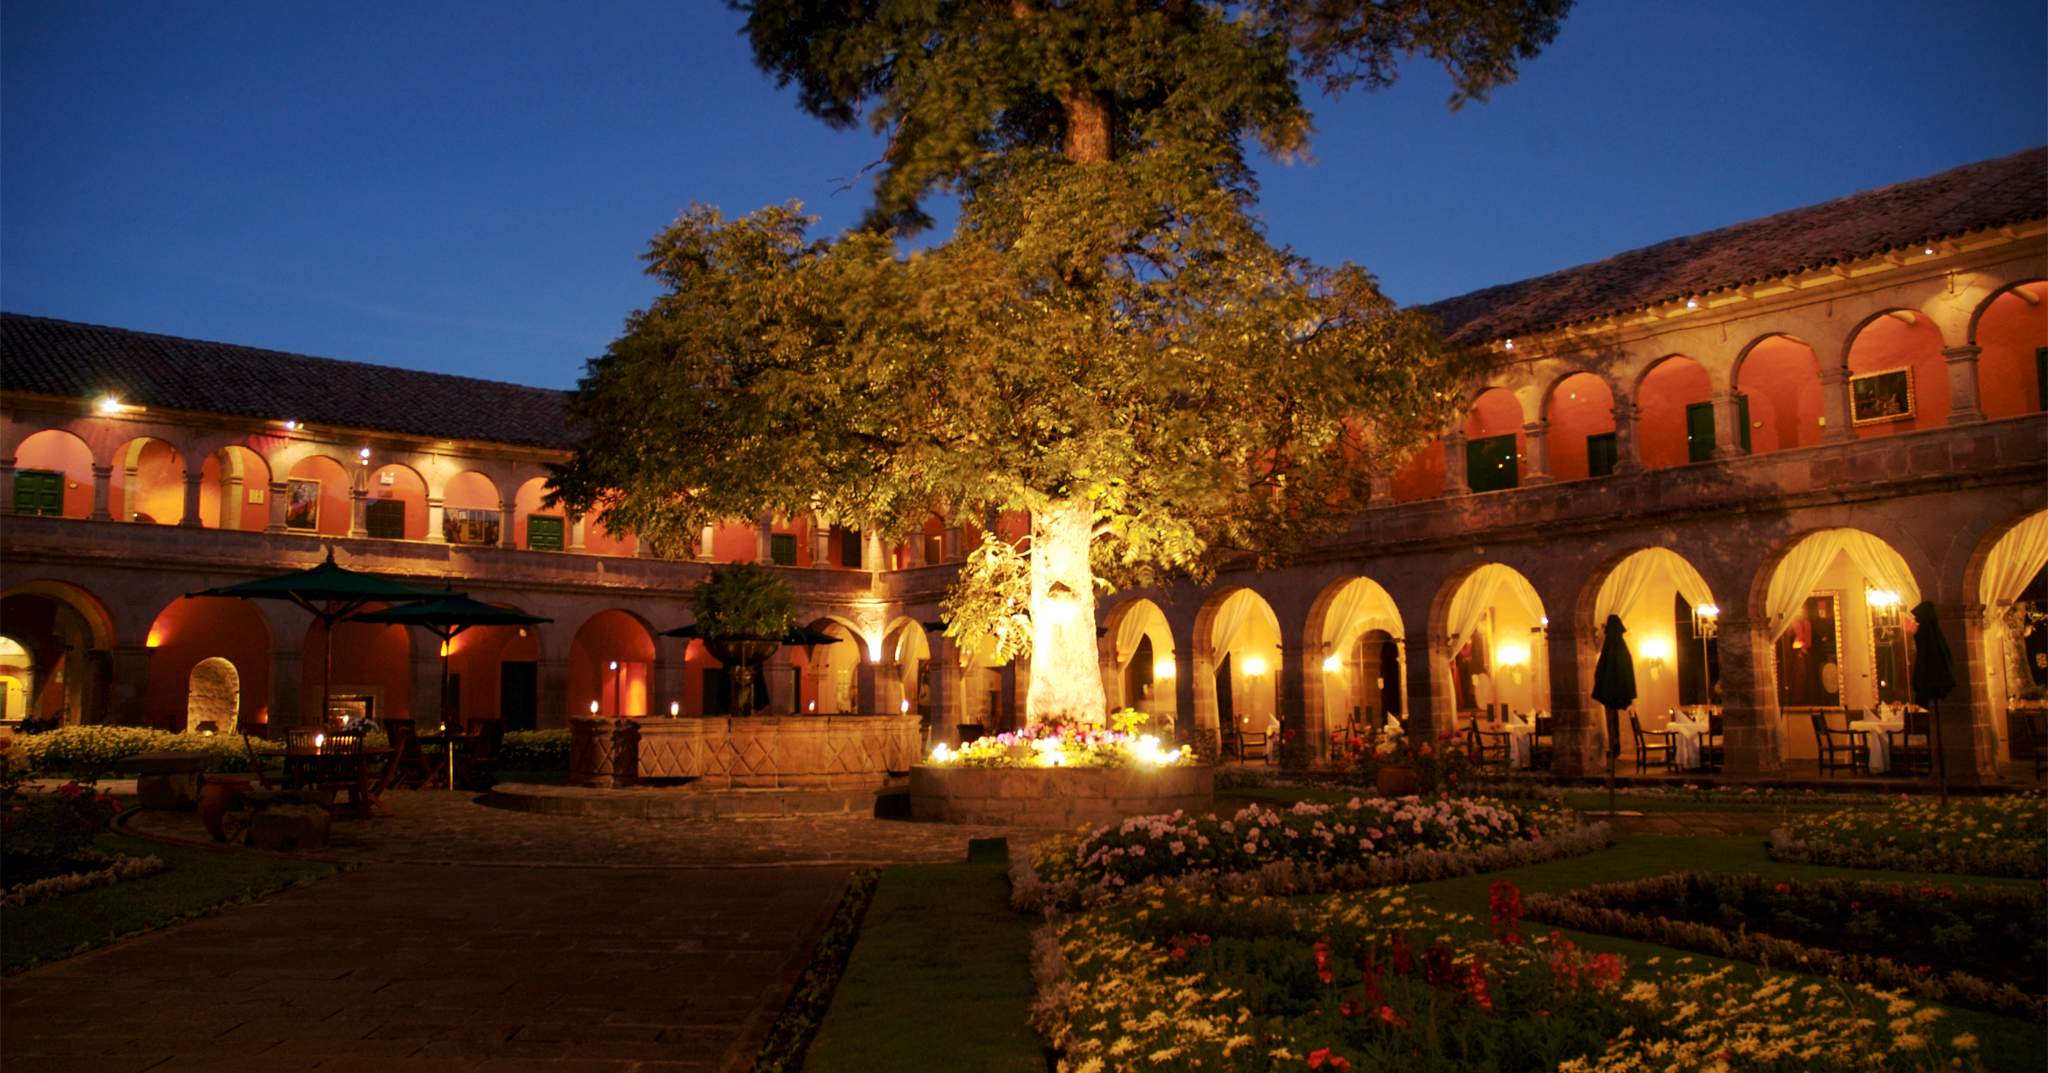 Belmond Hotel Monasterio - Cusco, Peru - Exclusive 5 Star Luxury Hotel